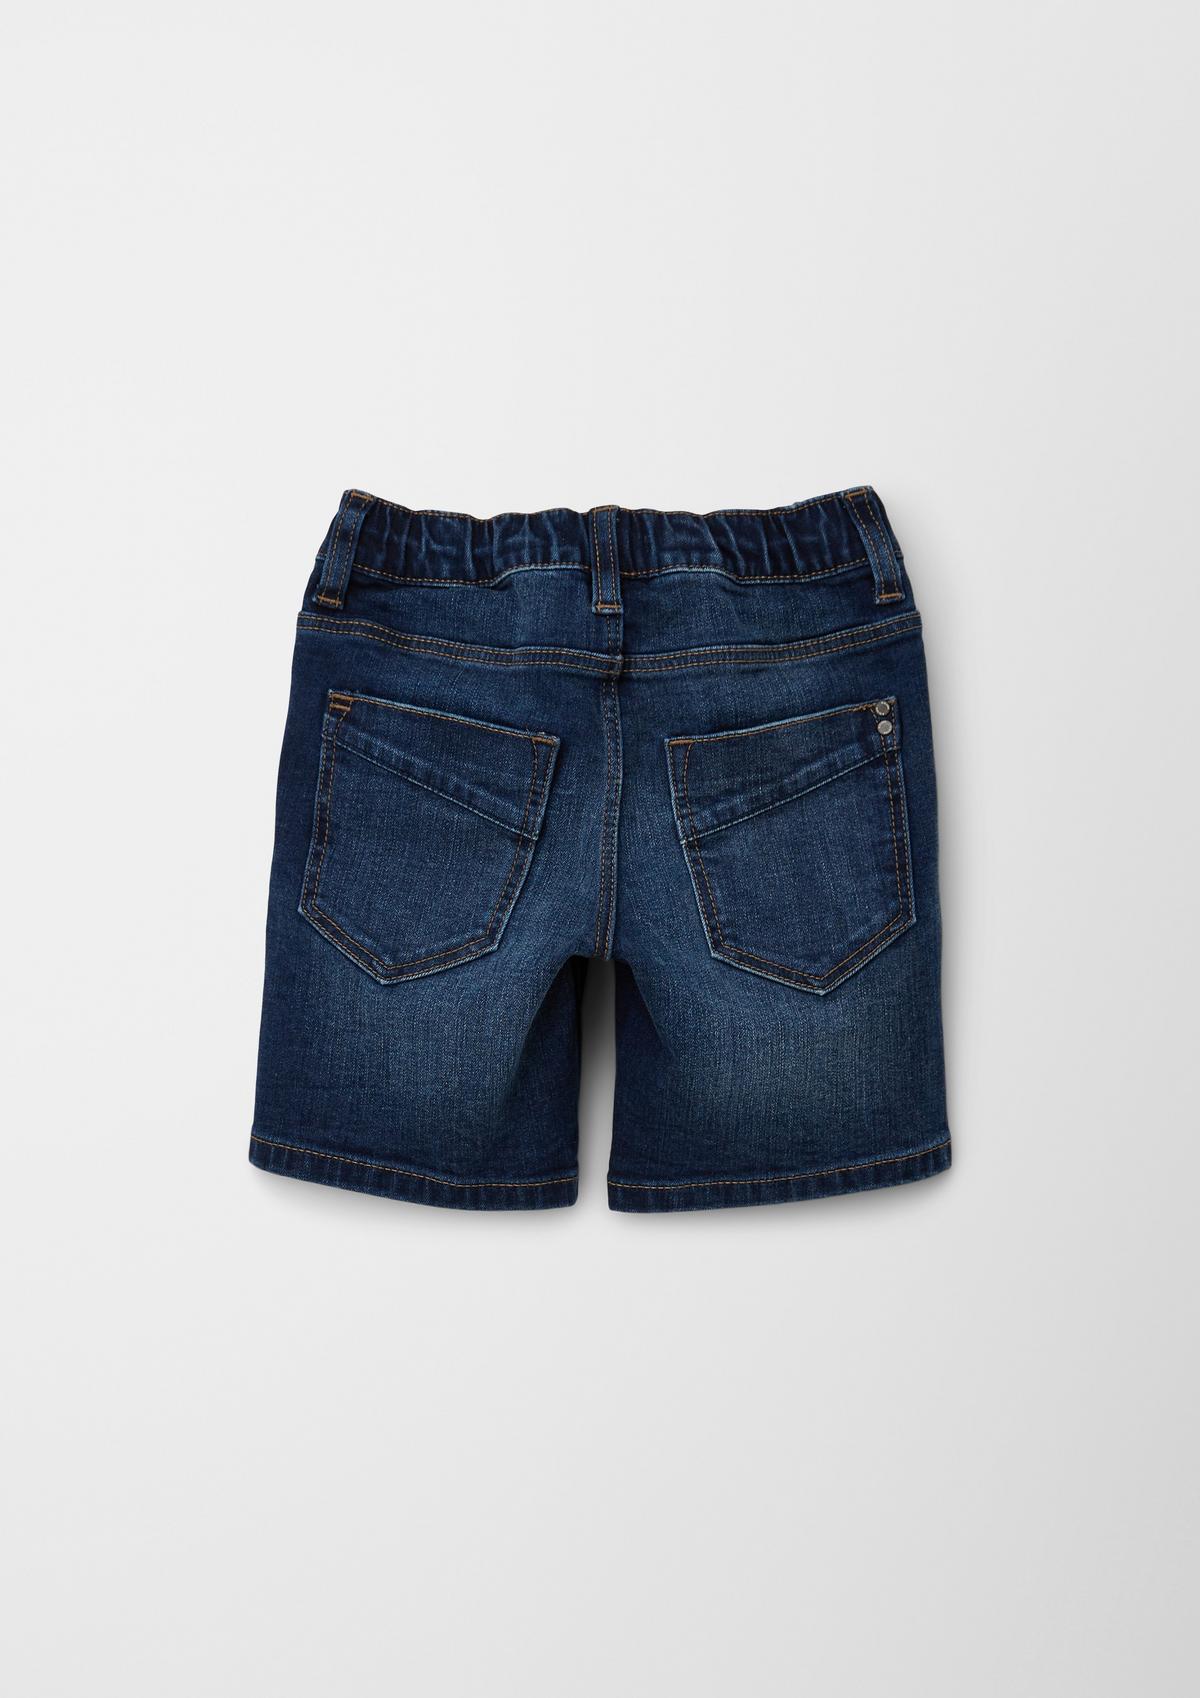 s.Oliver Jeans Pelle / regular fit / mid rise / straight leg / garment wash